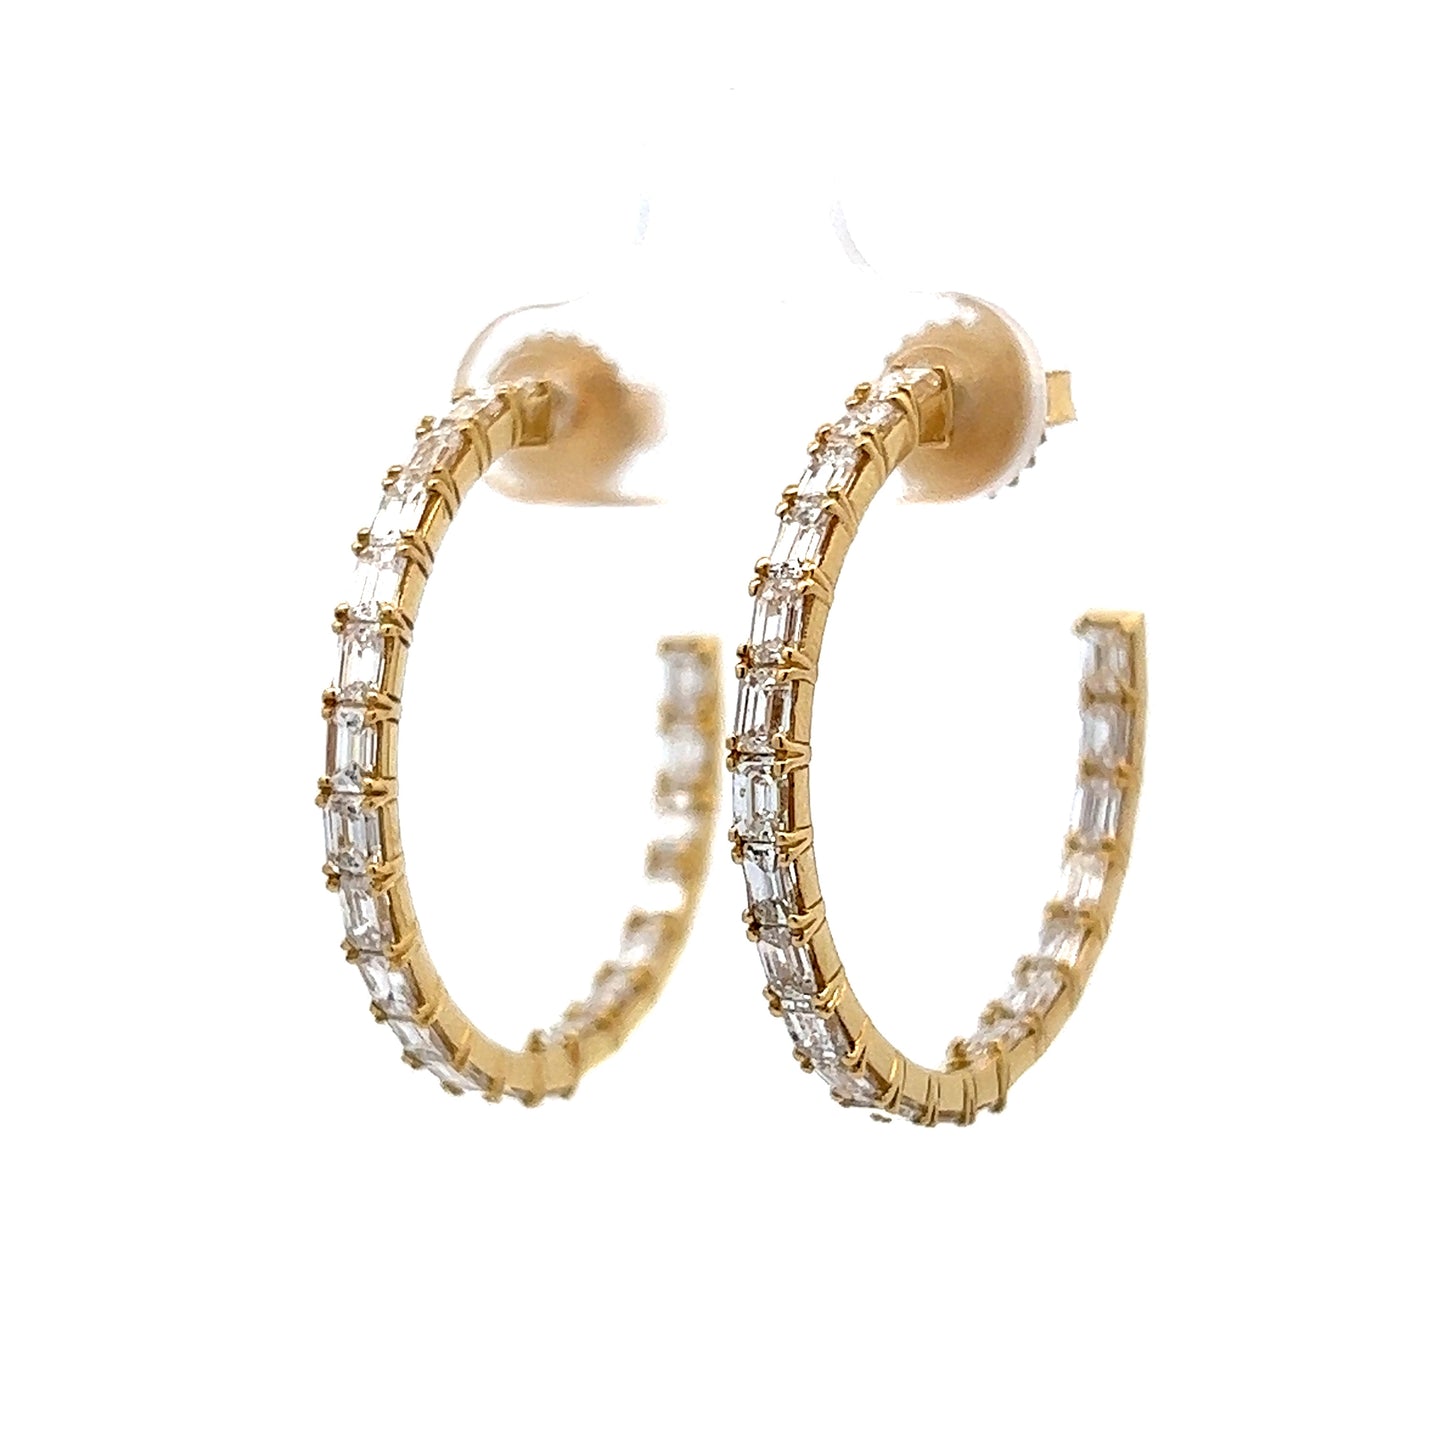 3.43 Baguette Diamond Hoop Earrings in 18k Yellow Gold